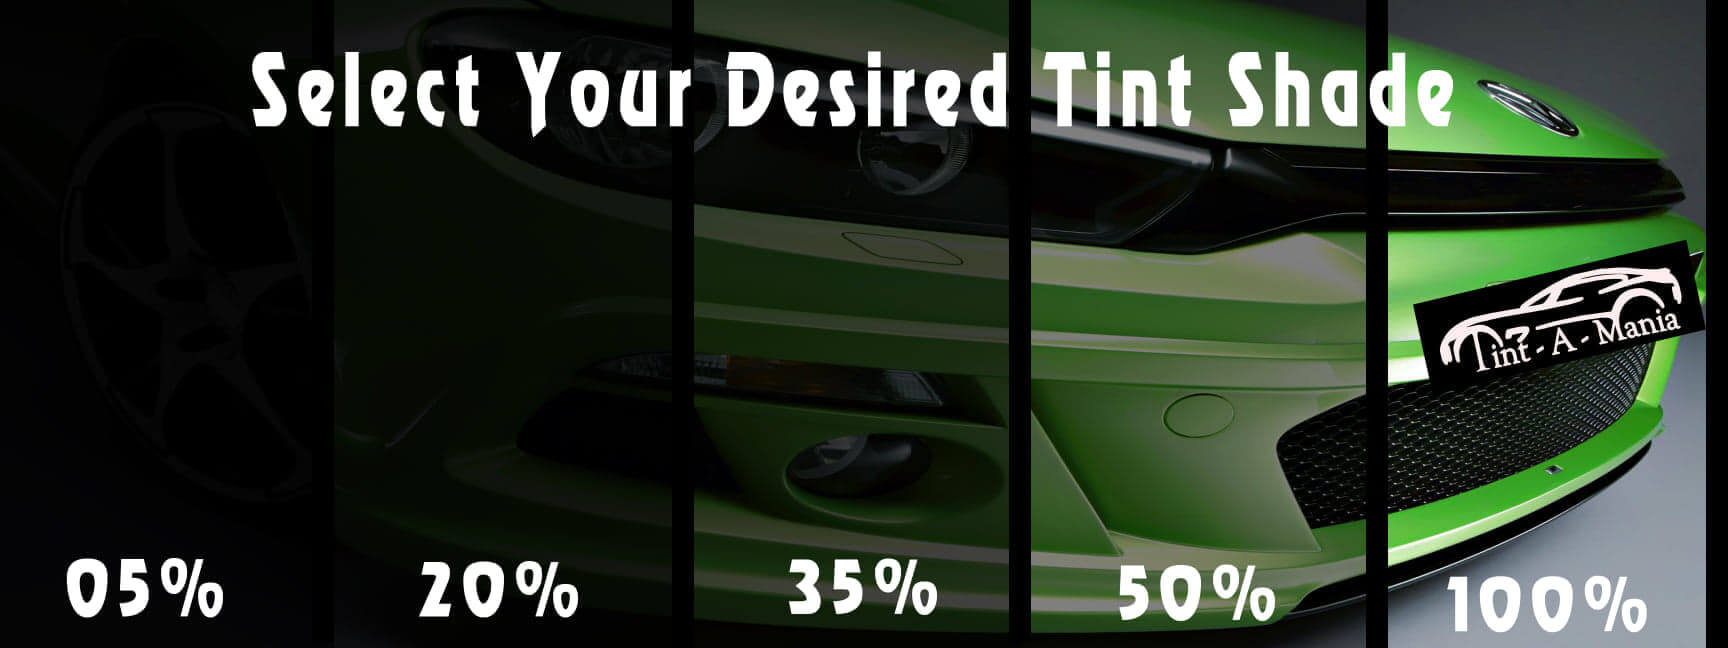 best window tint percentage